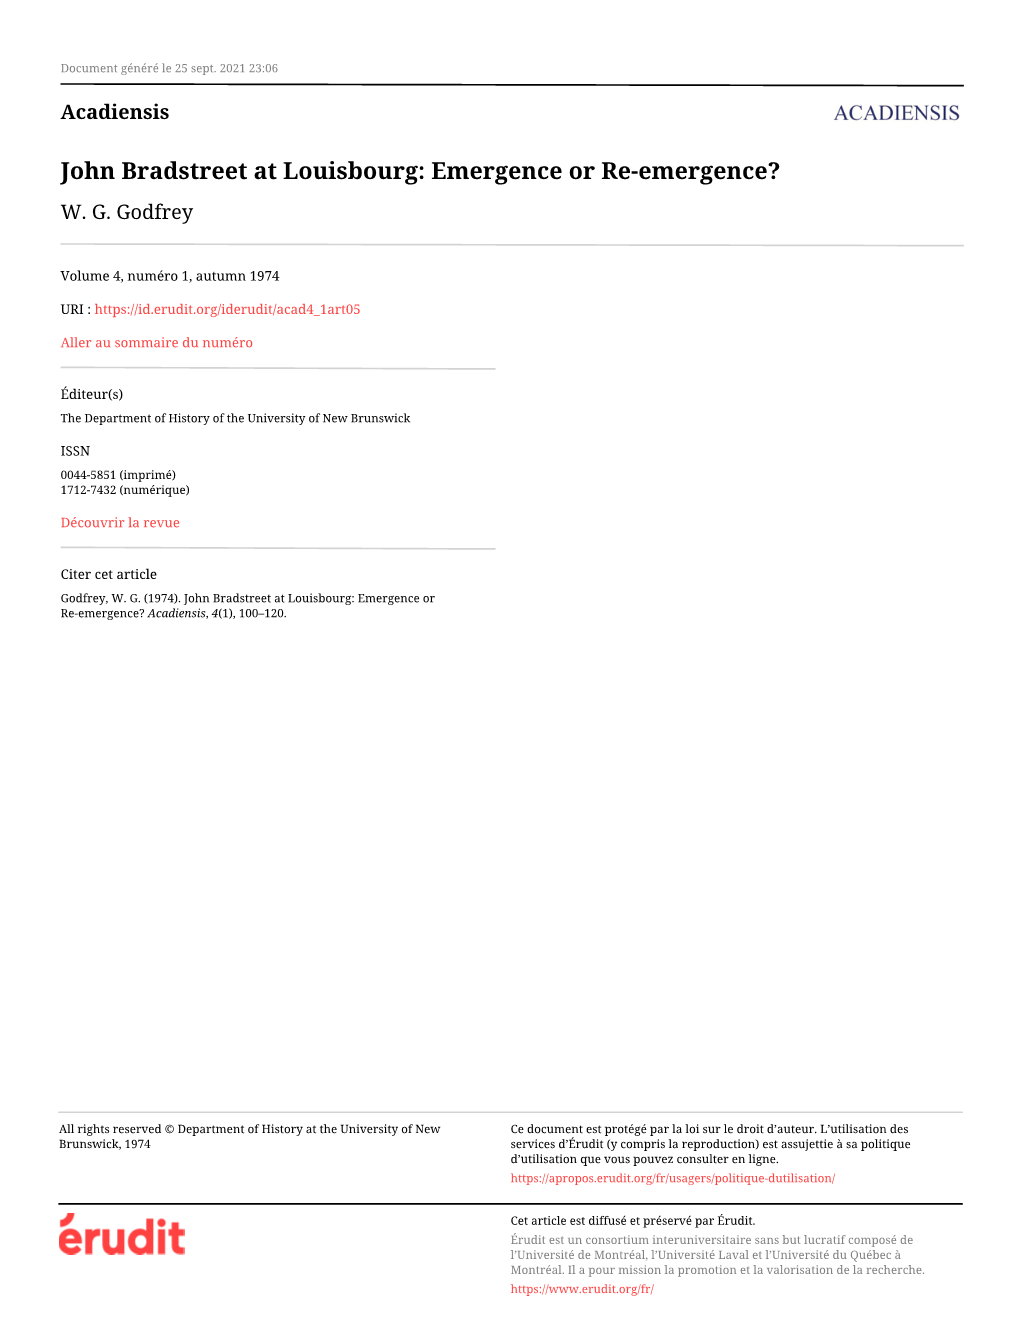 John Bradstreet at Louisbourg: Emergence Or Re-Emergence? W